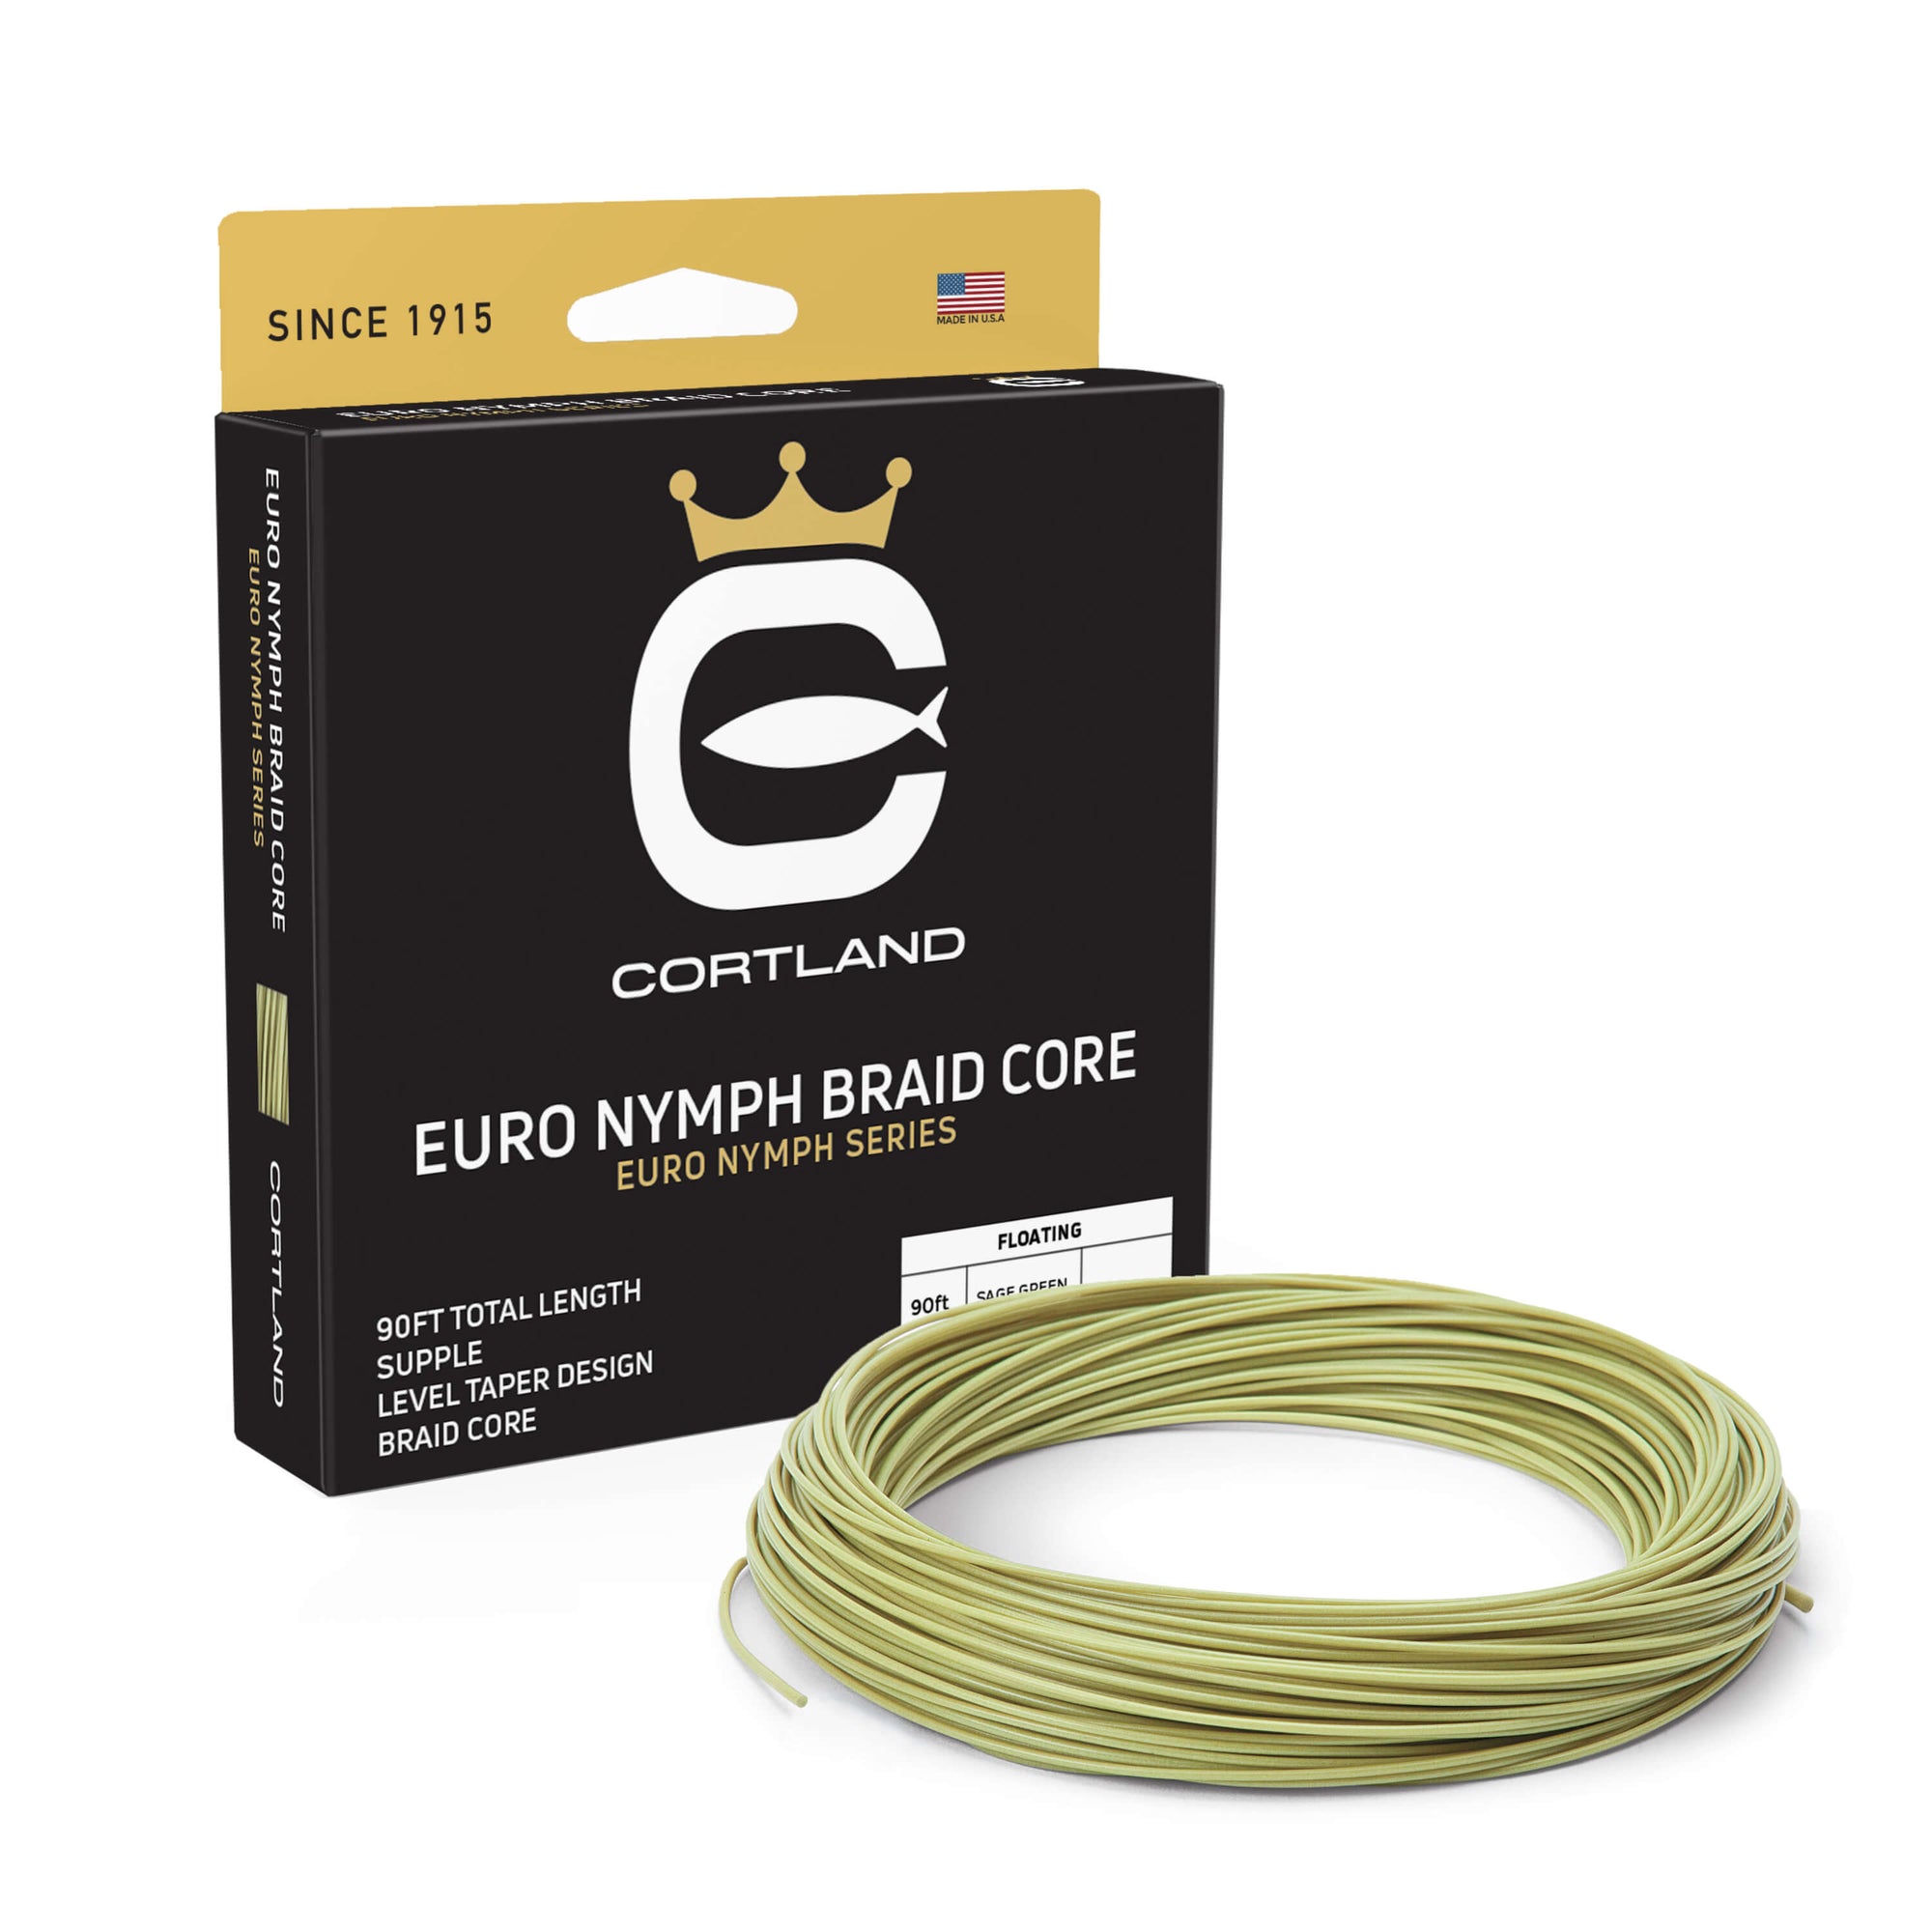 Cortland Euro Nymph Braid Core Line .022 / Level